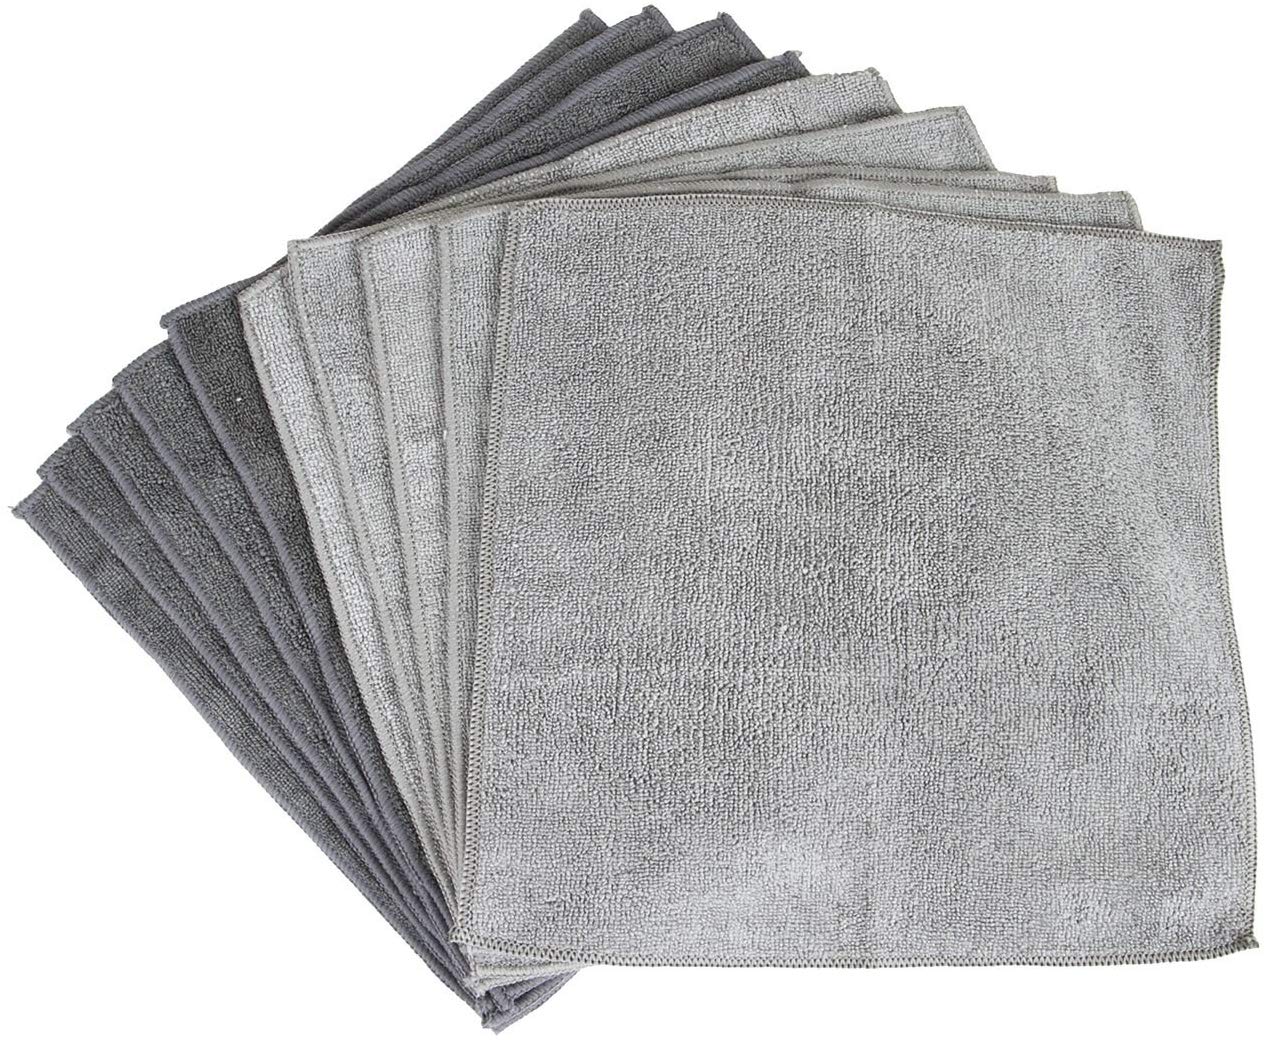 Sophisti-Clean Stainless Steel Microfiber Cloths